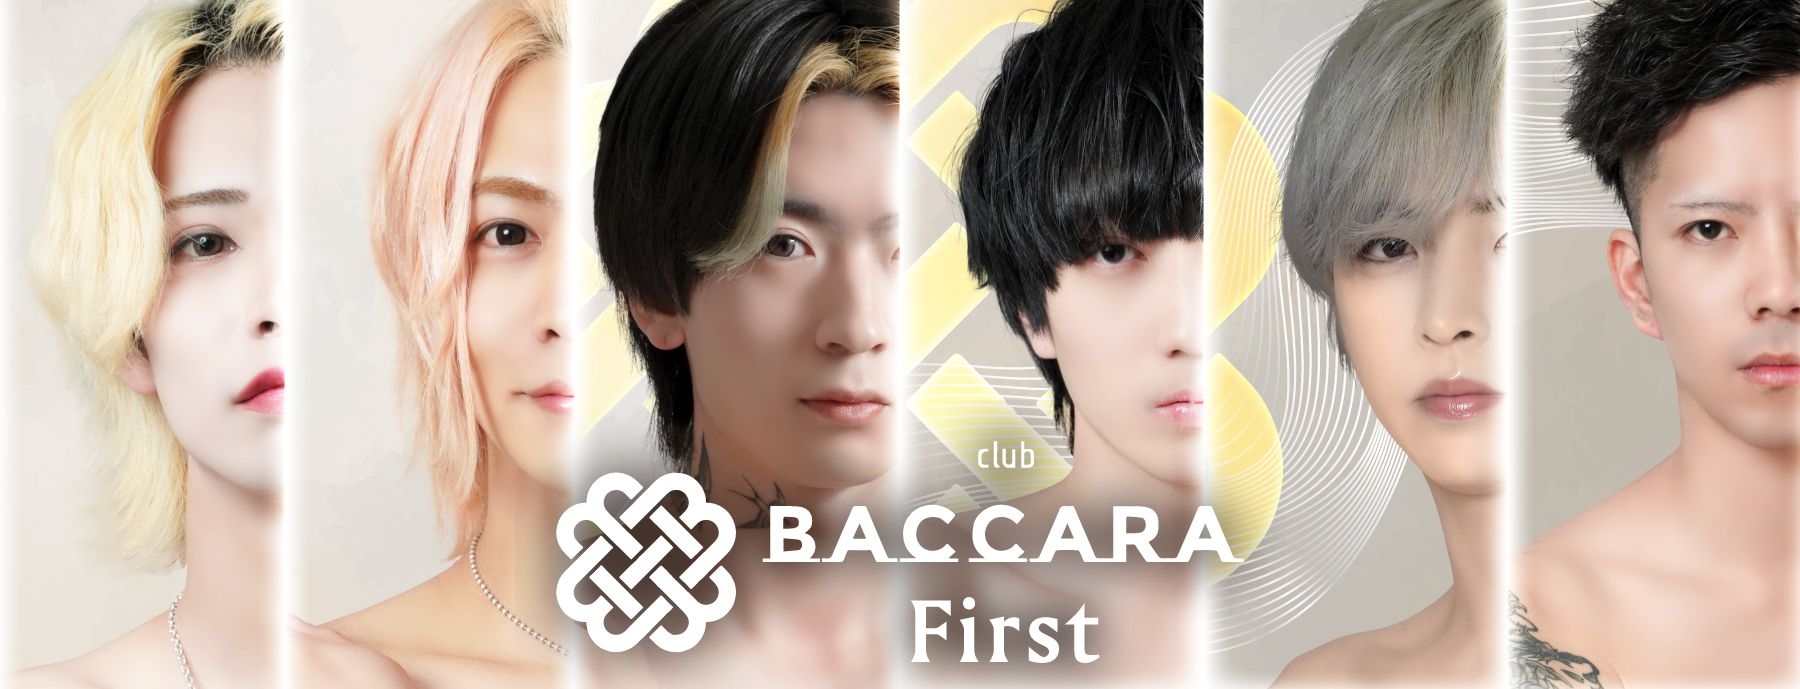 CLUB BACCARA 1st